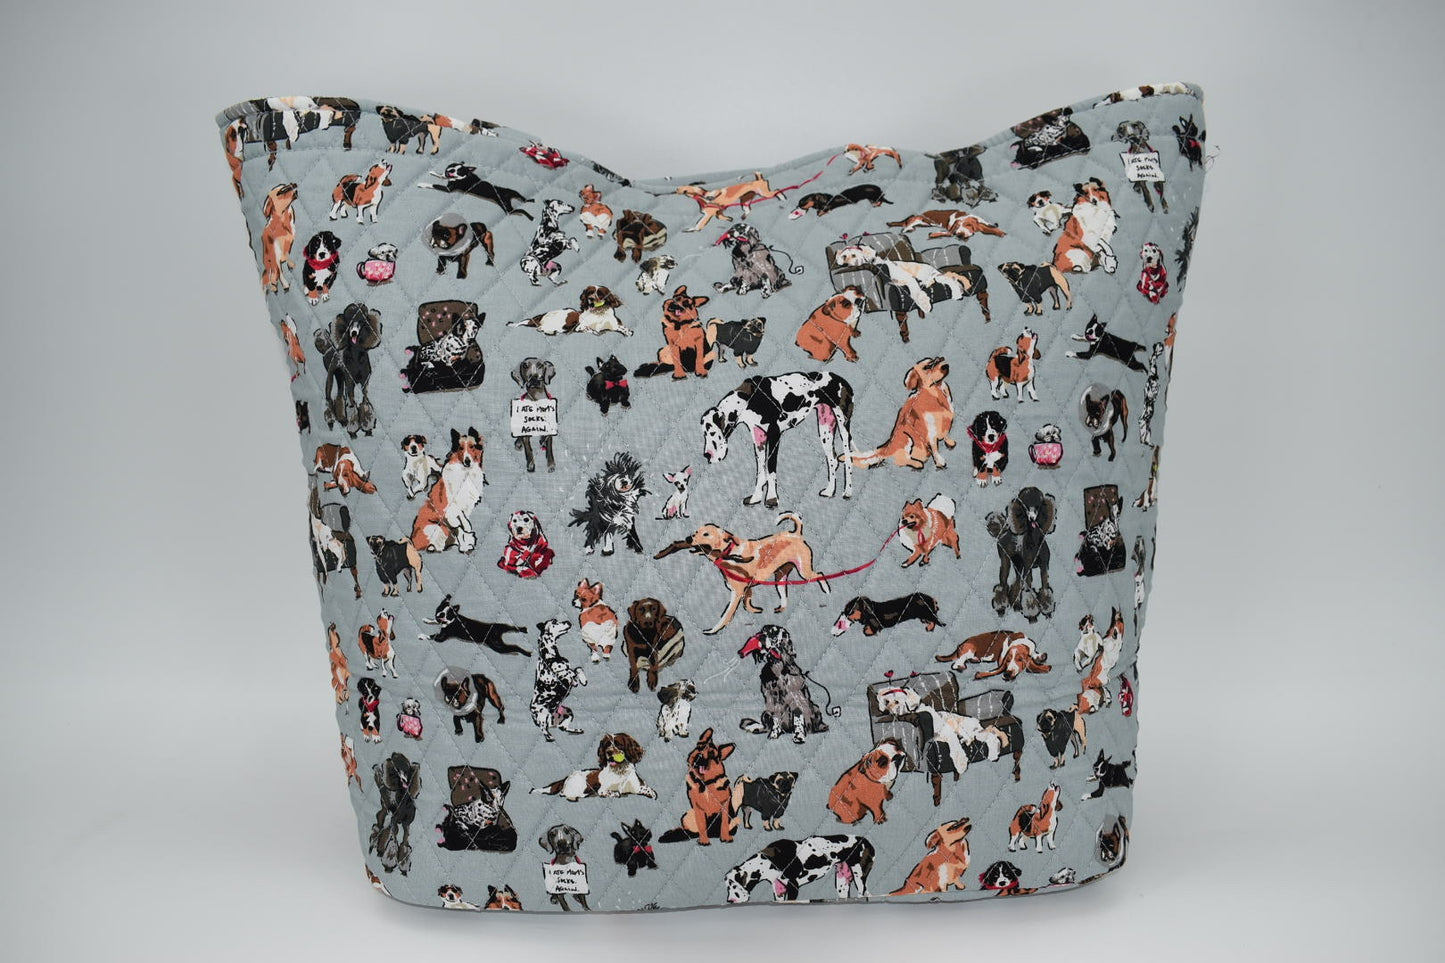 Vera Bradley Grand Tote Bag in "Dog Show" Pattern